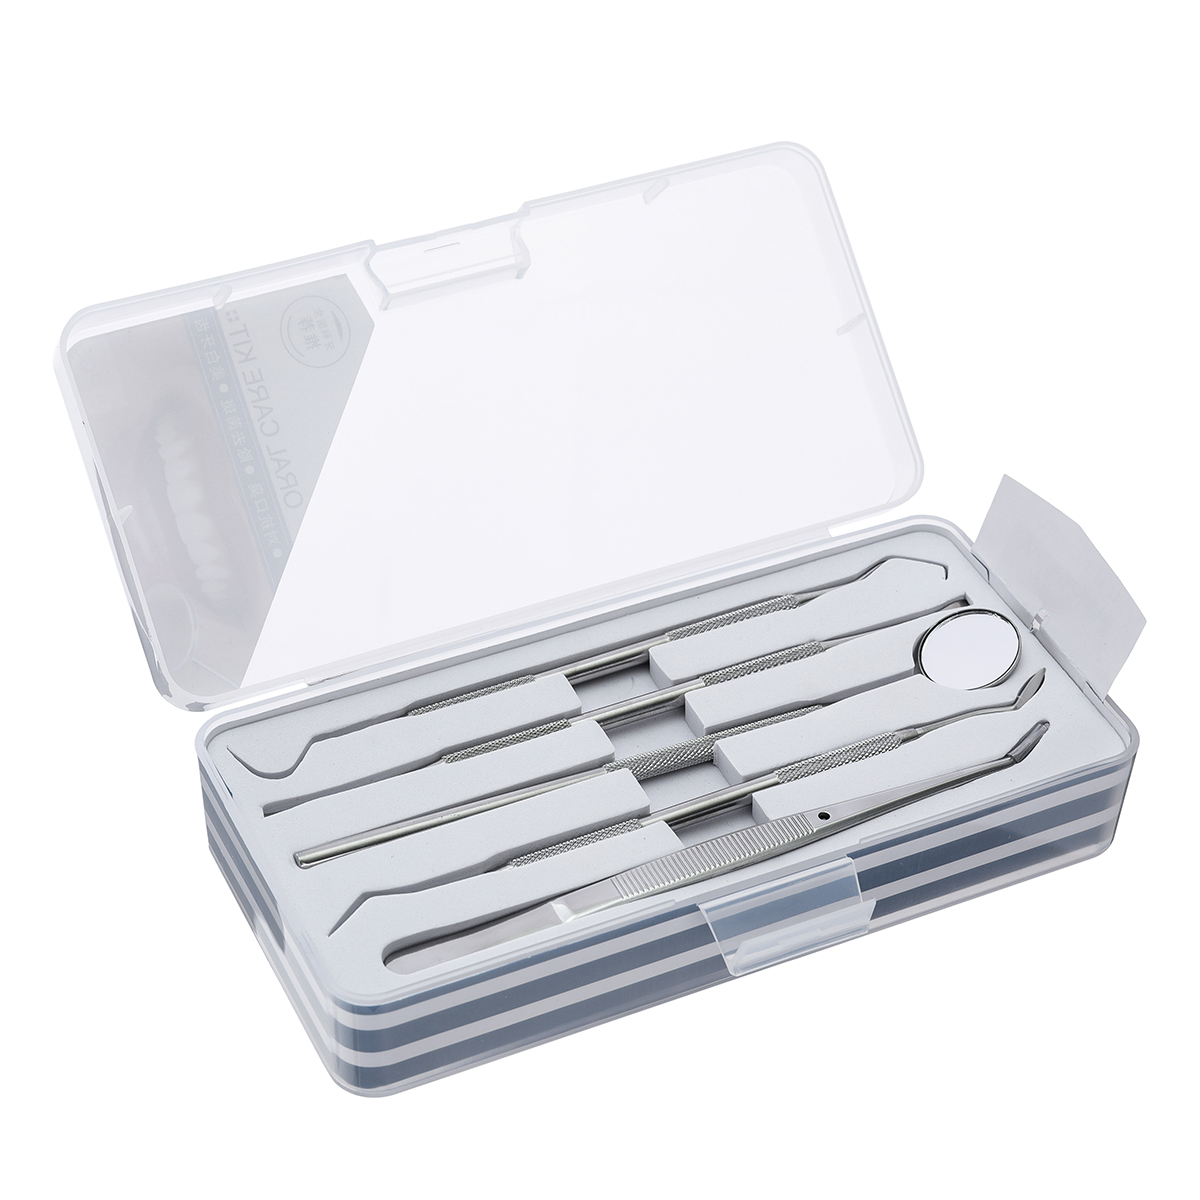 5pcs-Stainless-Oral-Care-Dental-Tools-Kit-Dentist-Teeth-Clean-Hygiene-Picks-Mirror-Tool-1320430-3